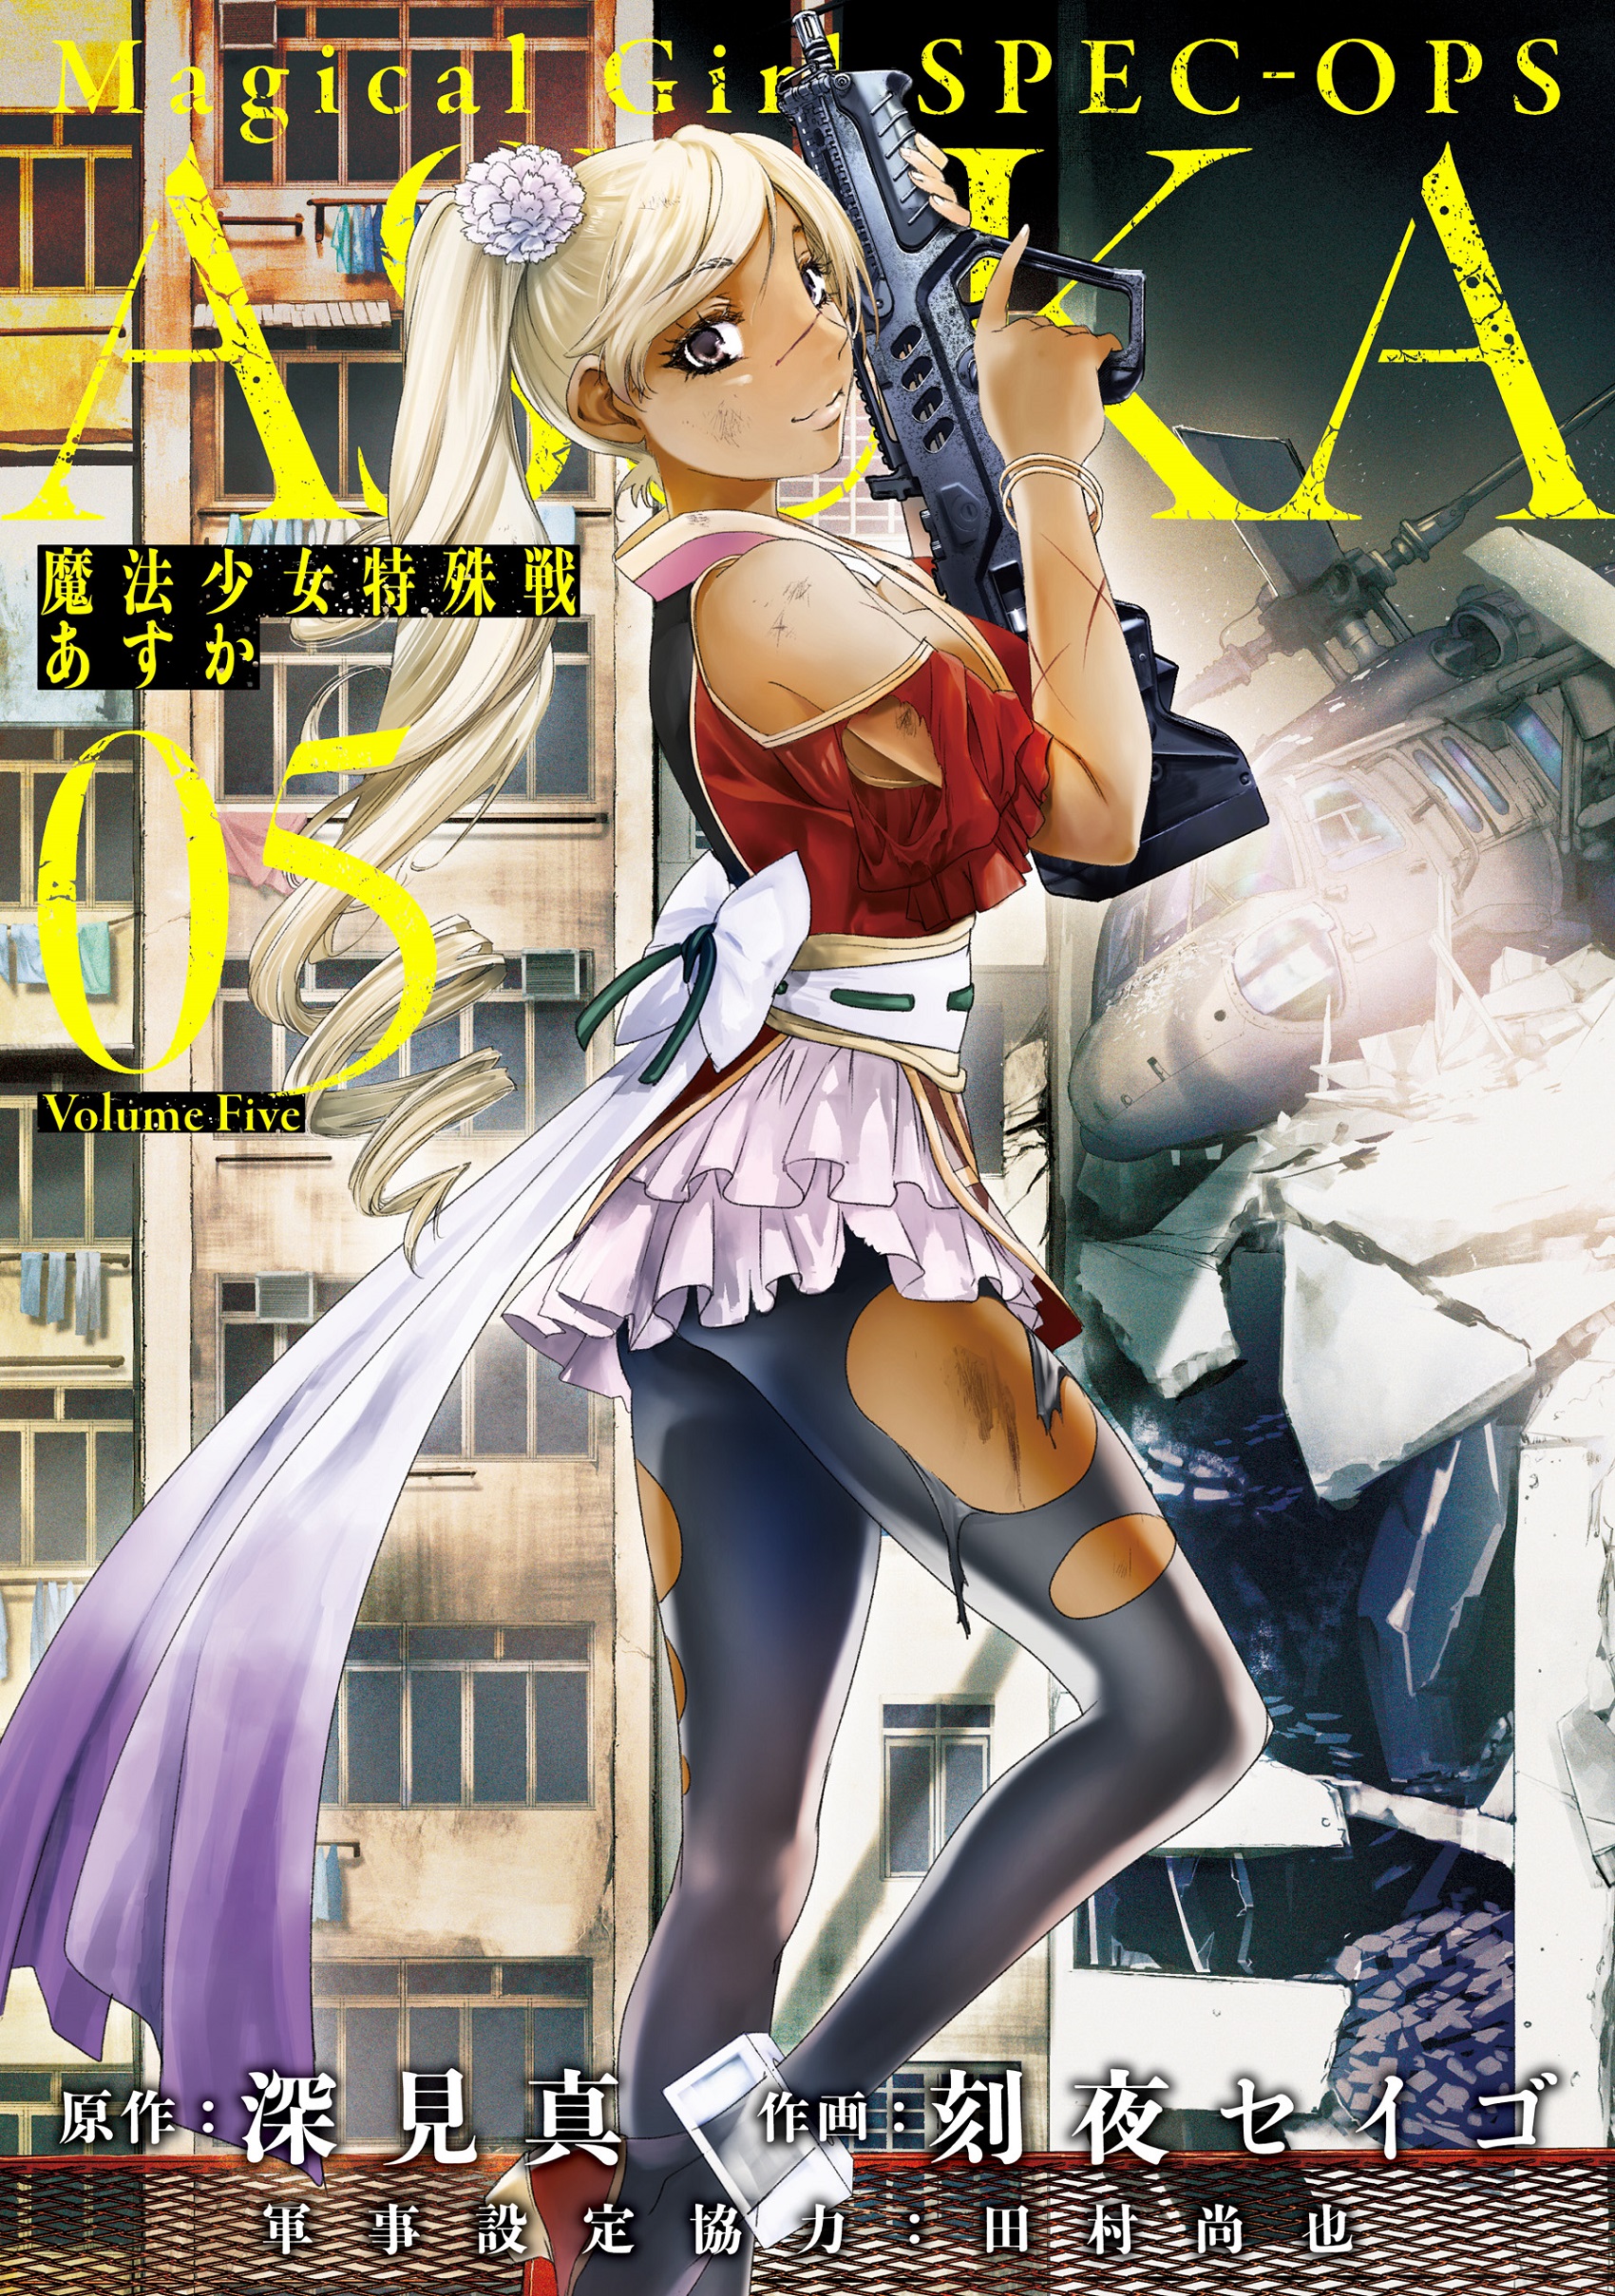 Manga Magical Girl Special Ops Asuka (Mahou Shoujo Tokushusen